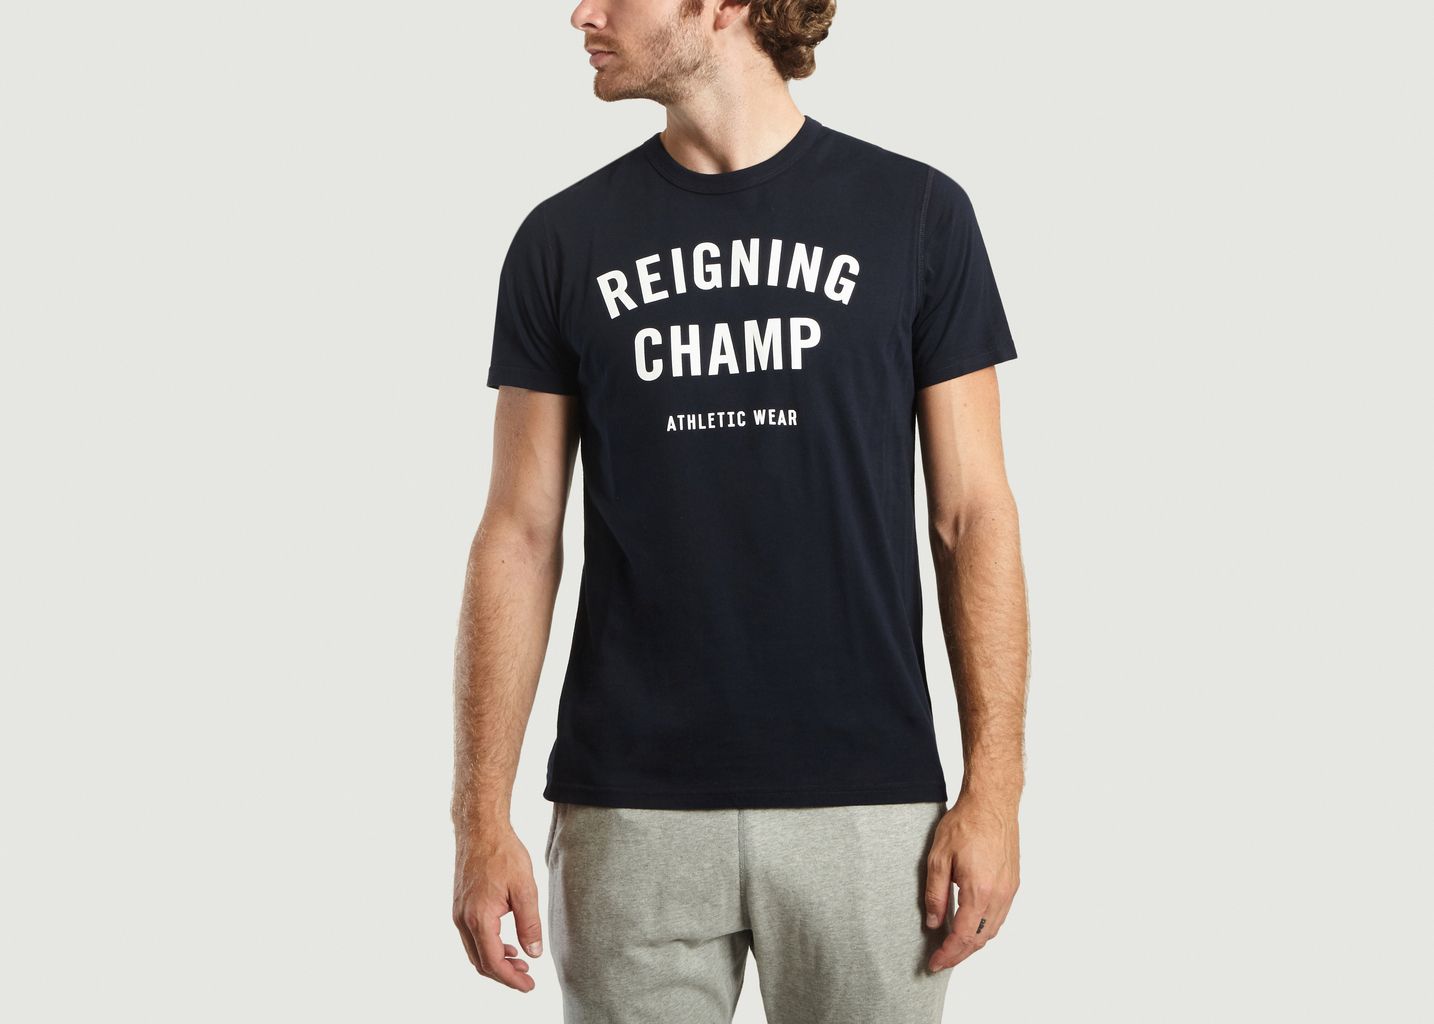 reigning champ shirts